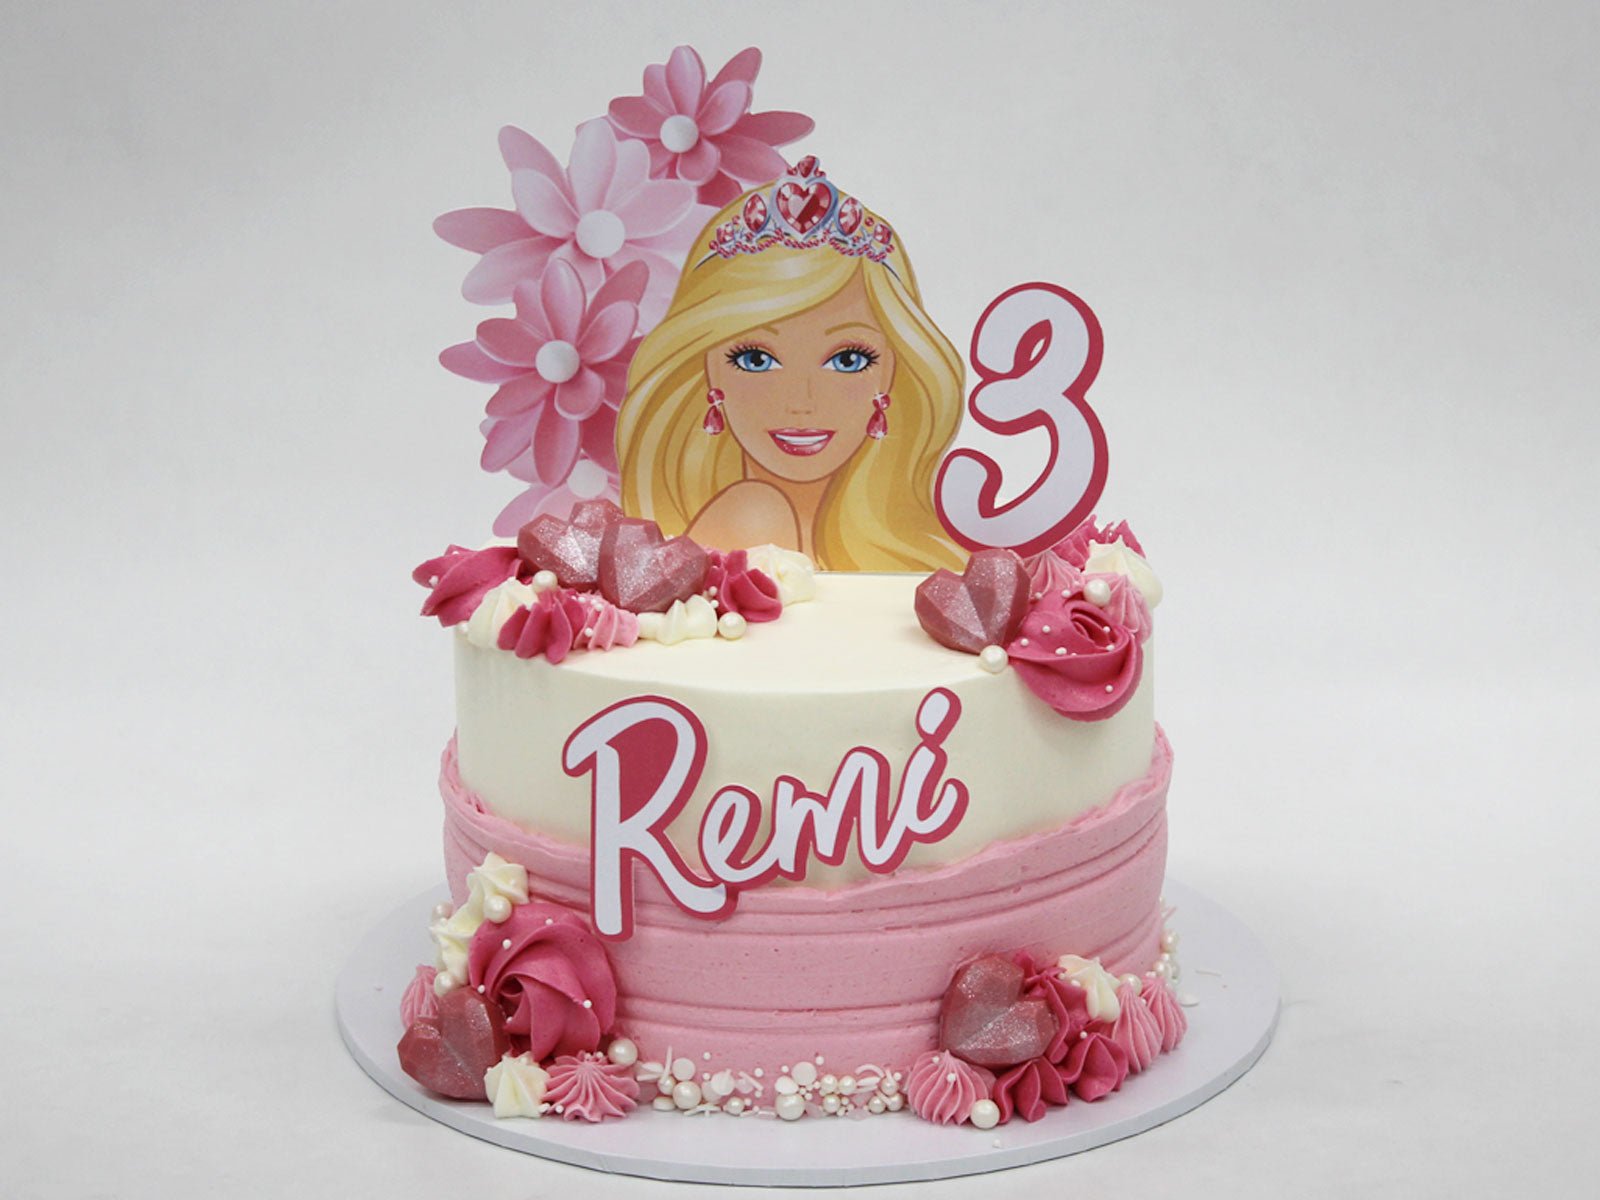 Margot Robbie Celebrates 32nd Birthday on Set of Barbie Movie